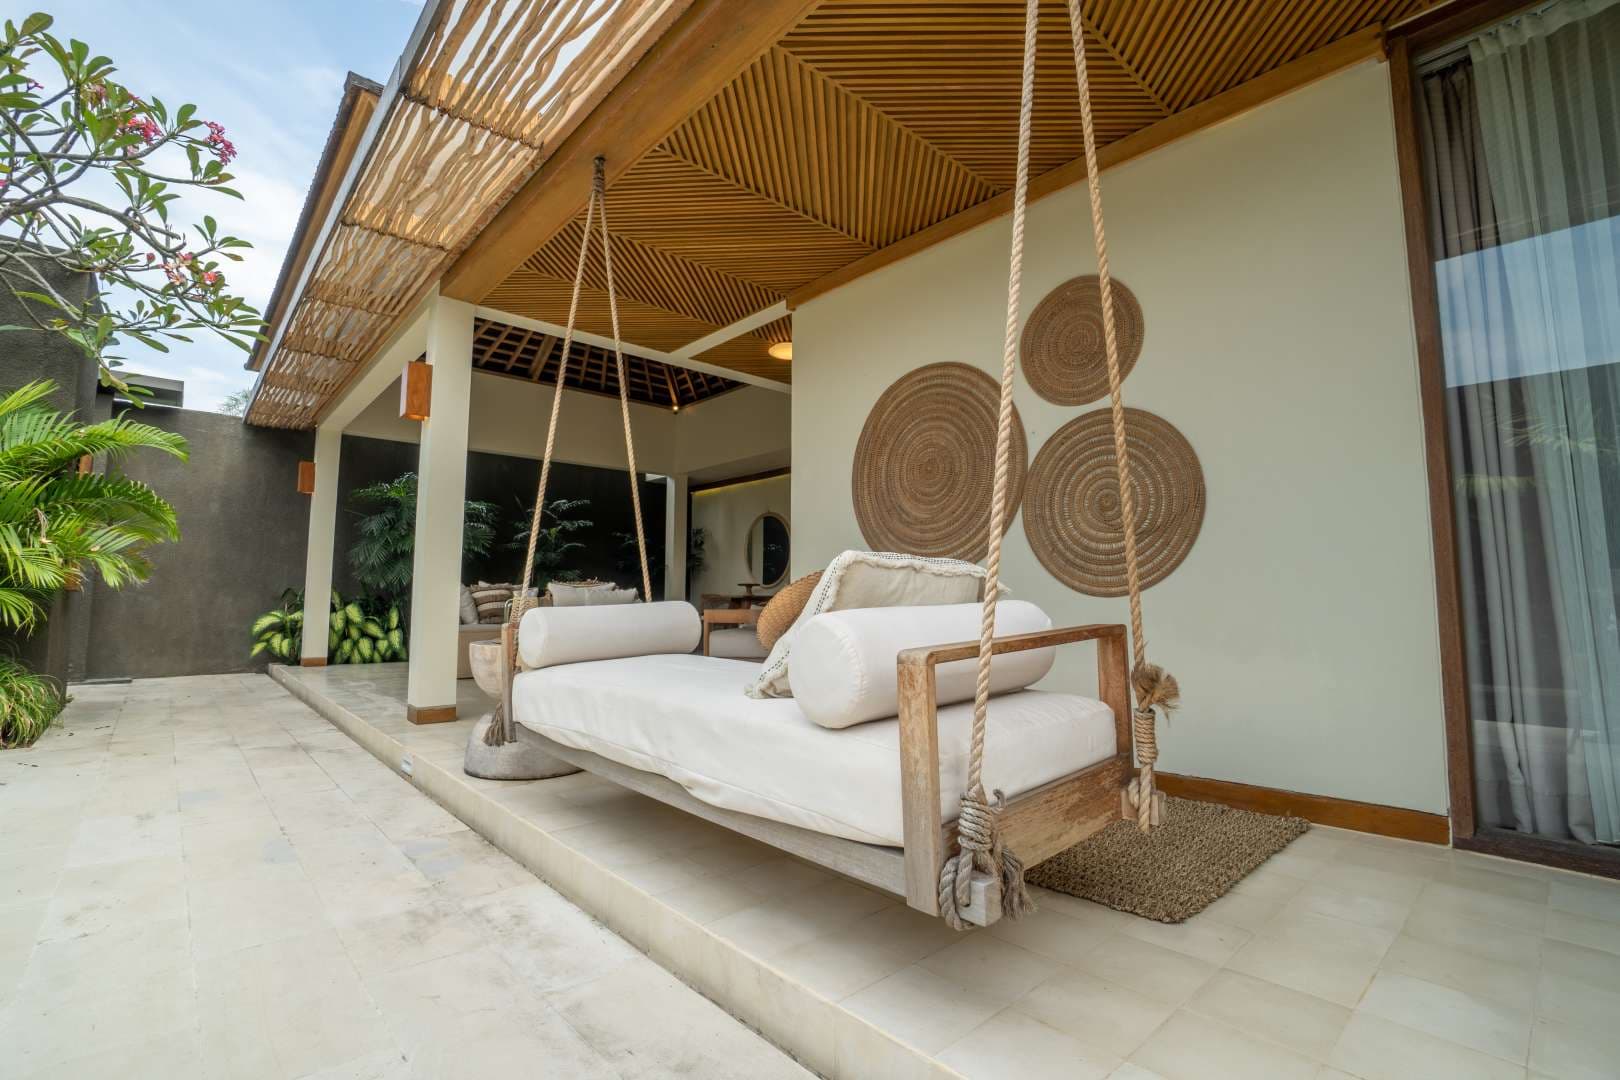 1 Bedroom Villa For Sale Bali Lp08536 11044224085f490.jpg